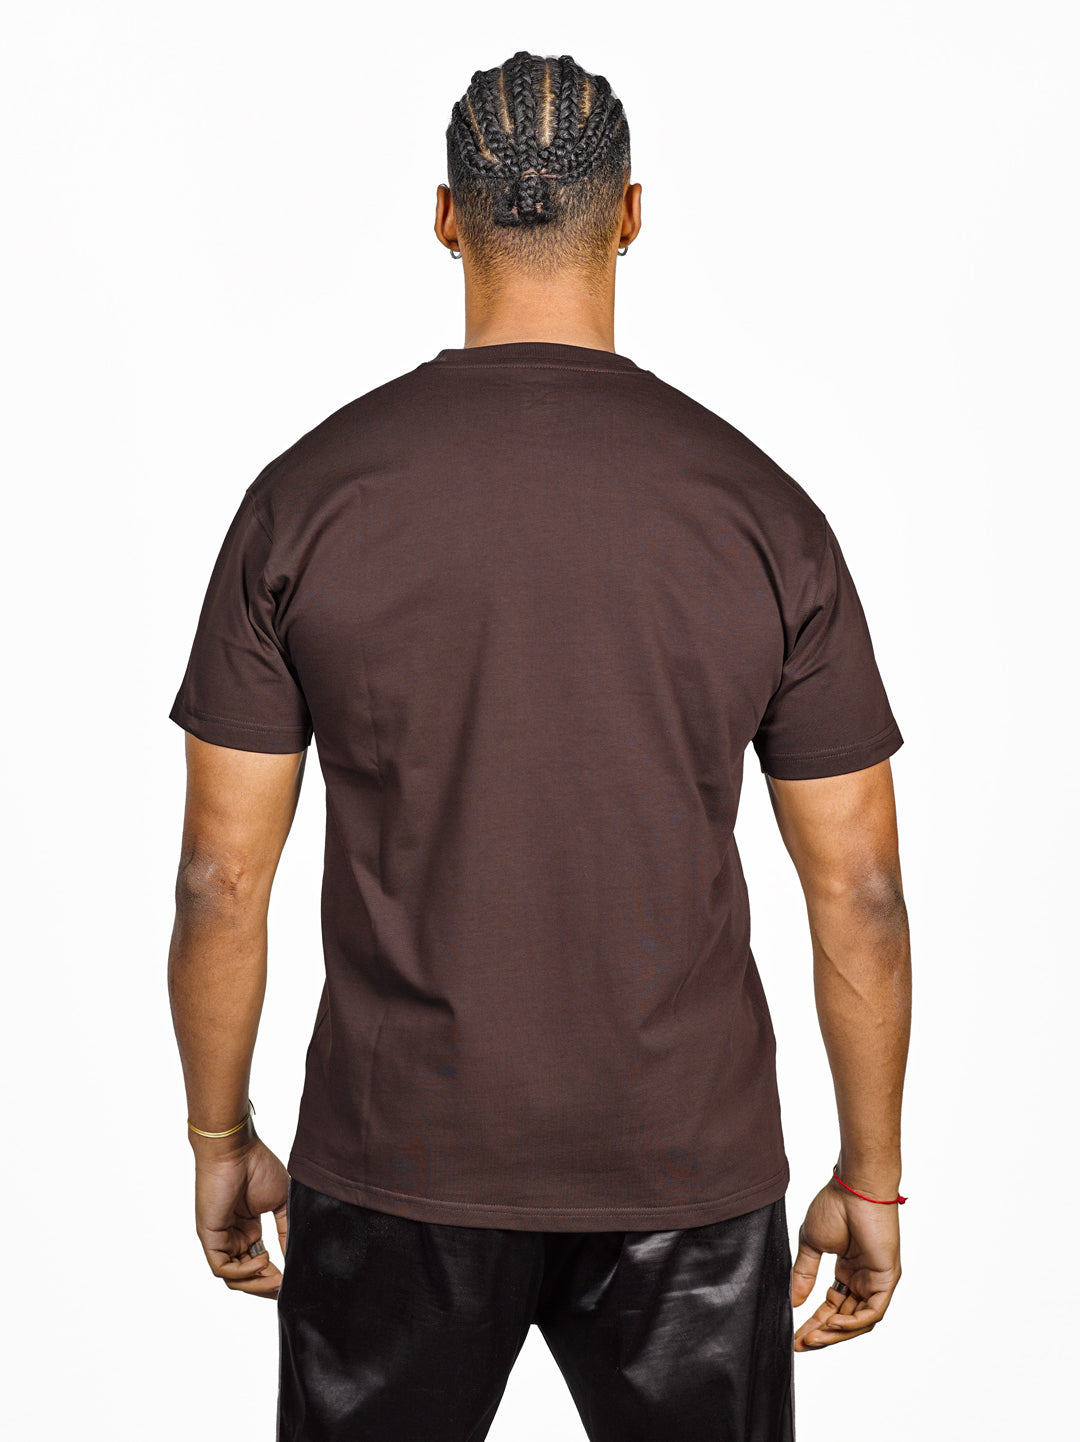 exetees Regular Round Neck T-Shirt (Brown)